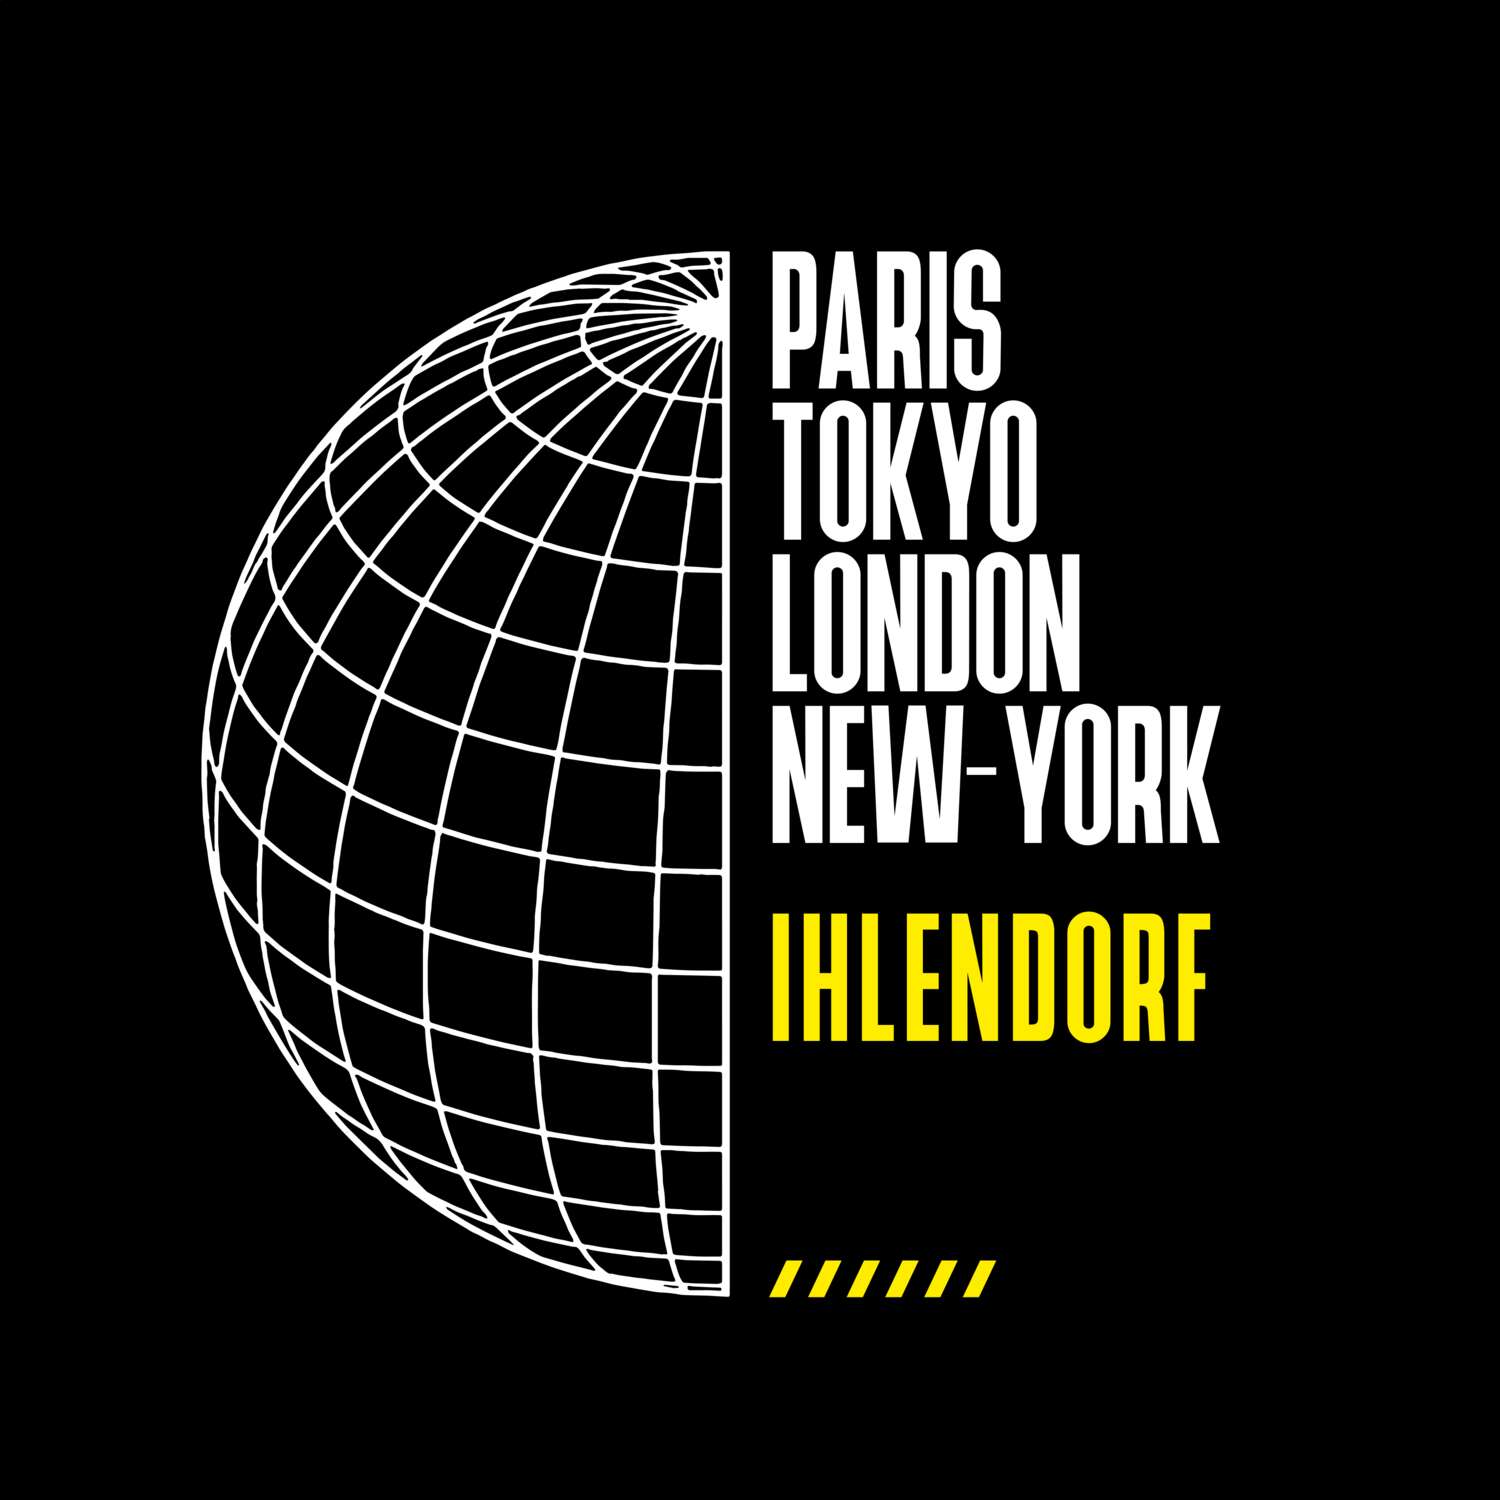 Ihlendorf T-Shirt »Paris Tokyo London«